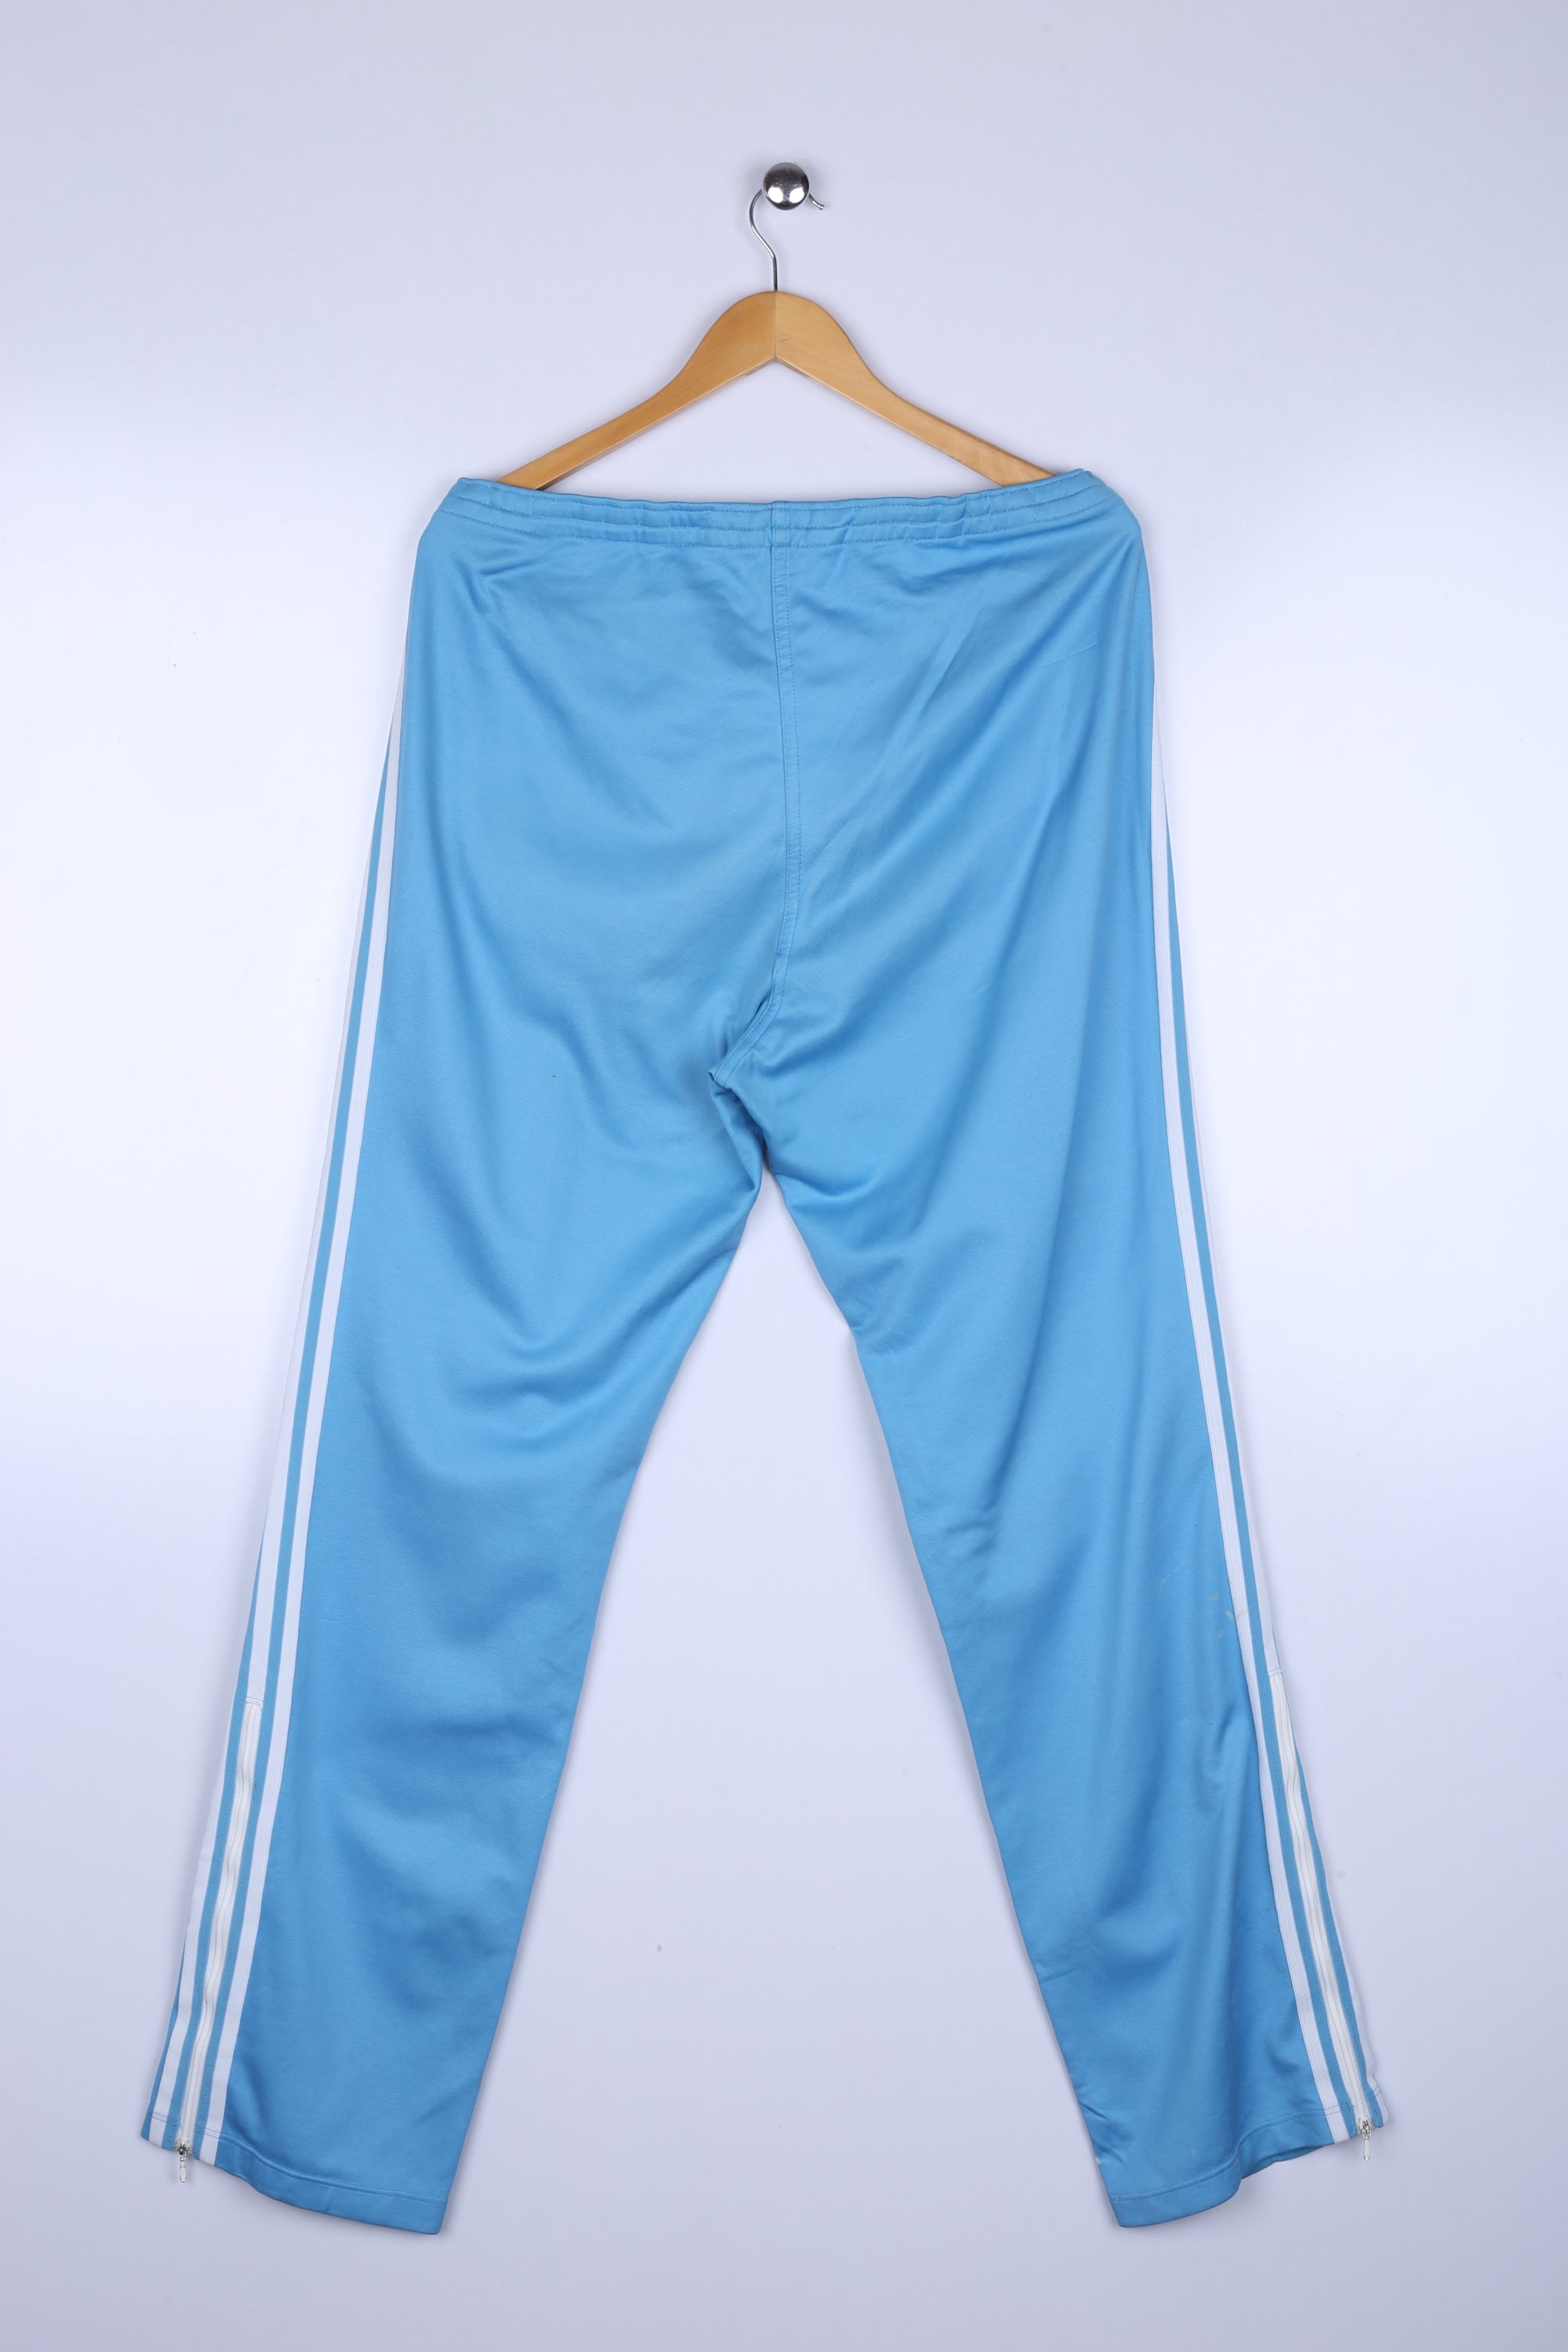 Vintage 90's Adidas Trouser Sky Blue